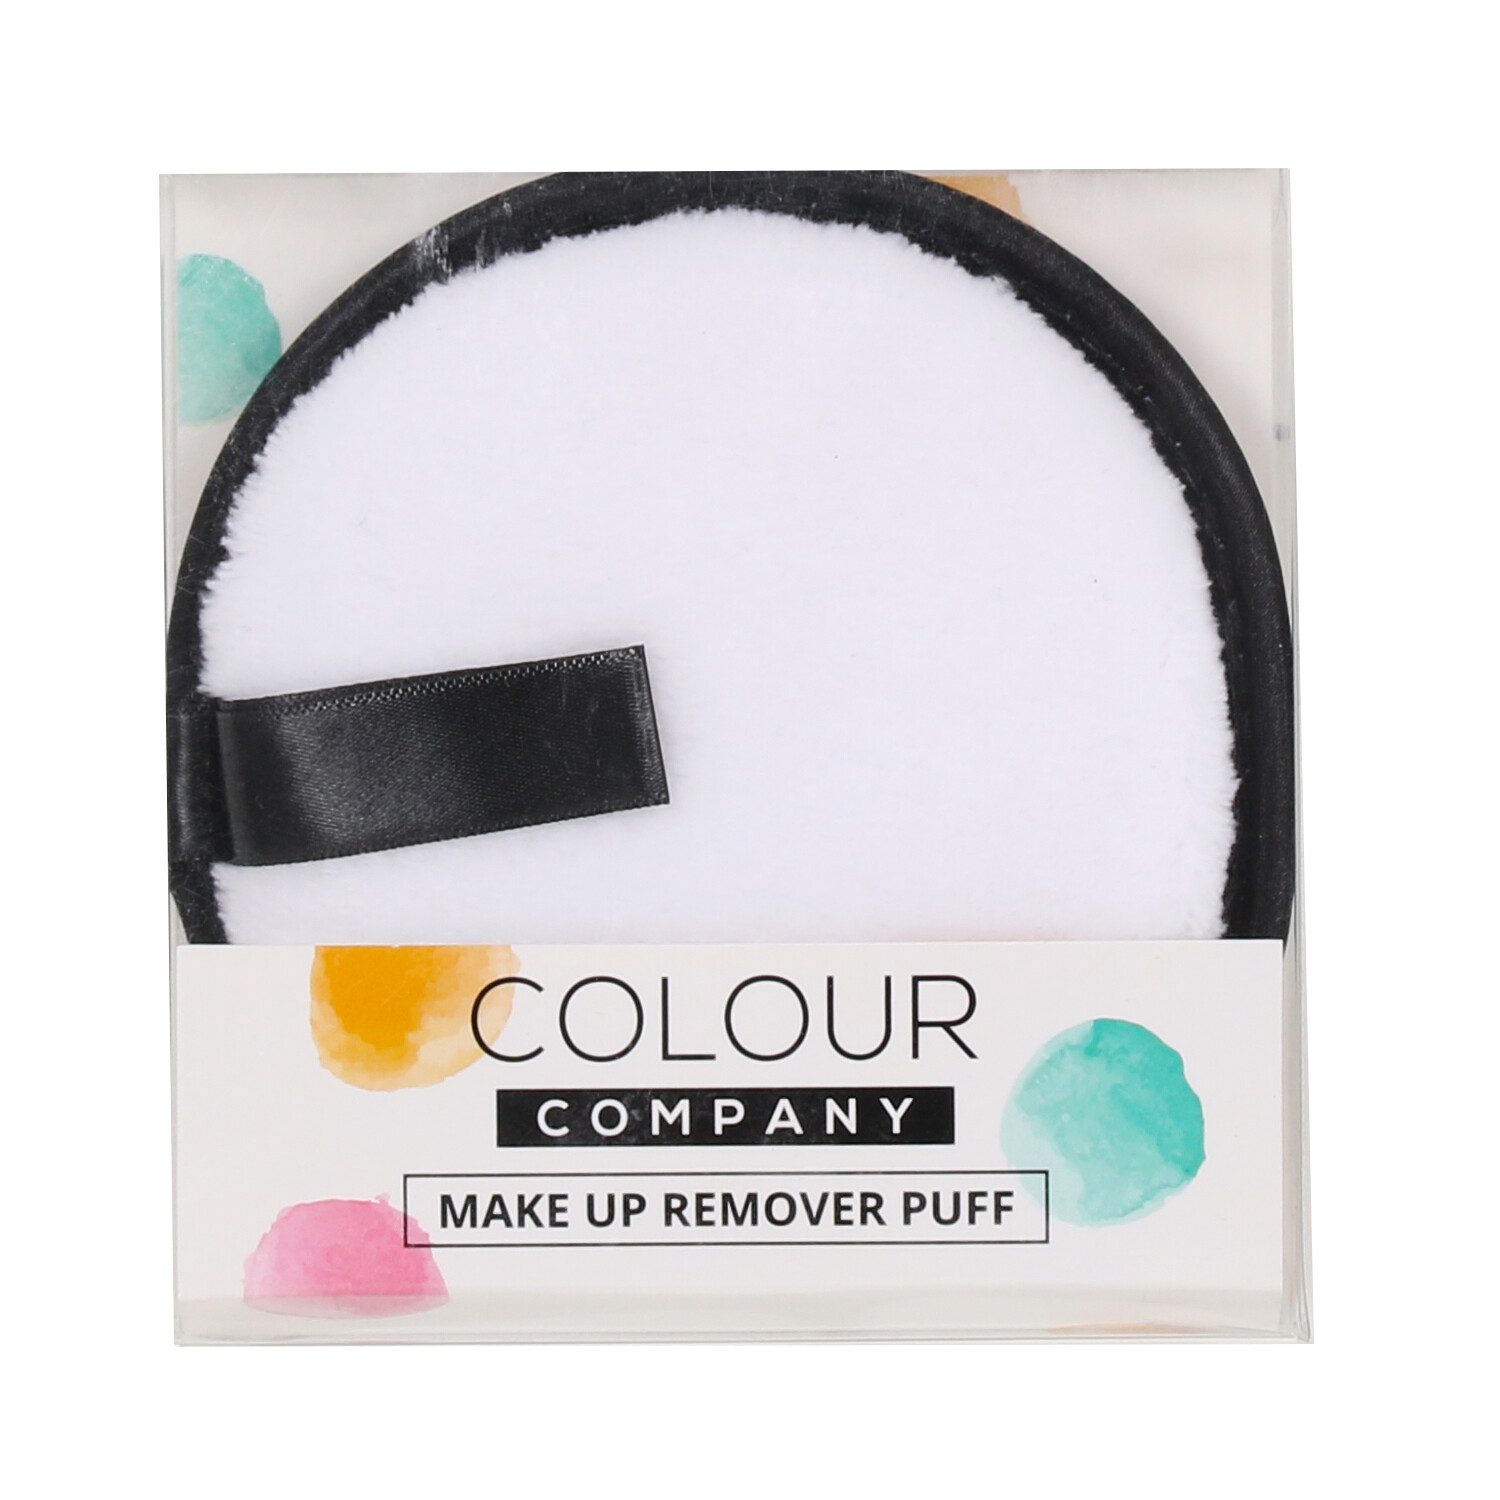 Colour Company Make Up Remover Puff - White Image